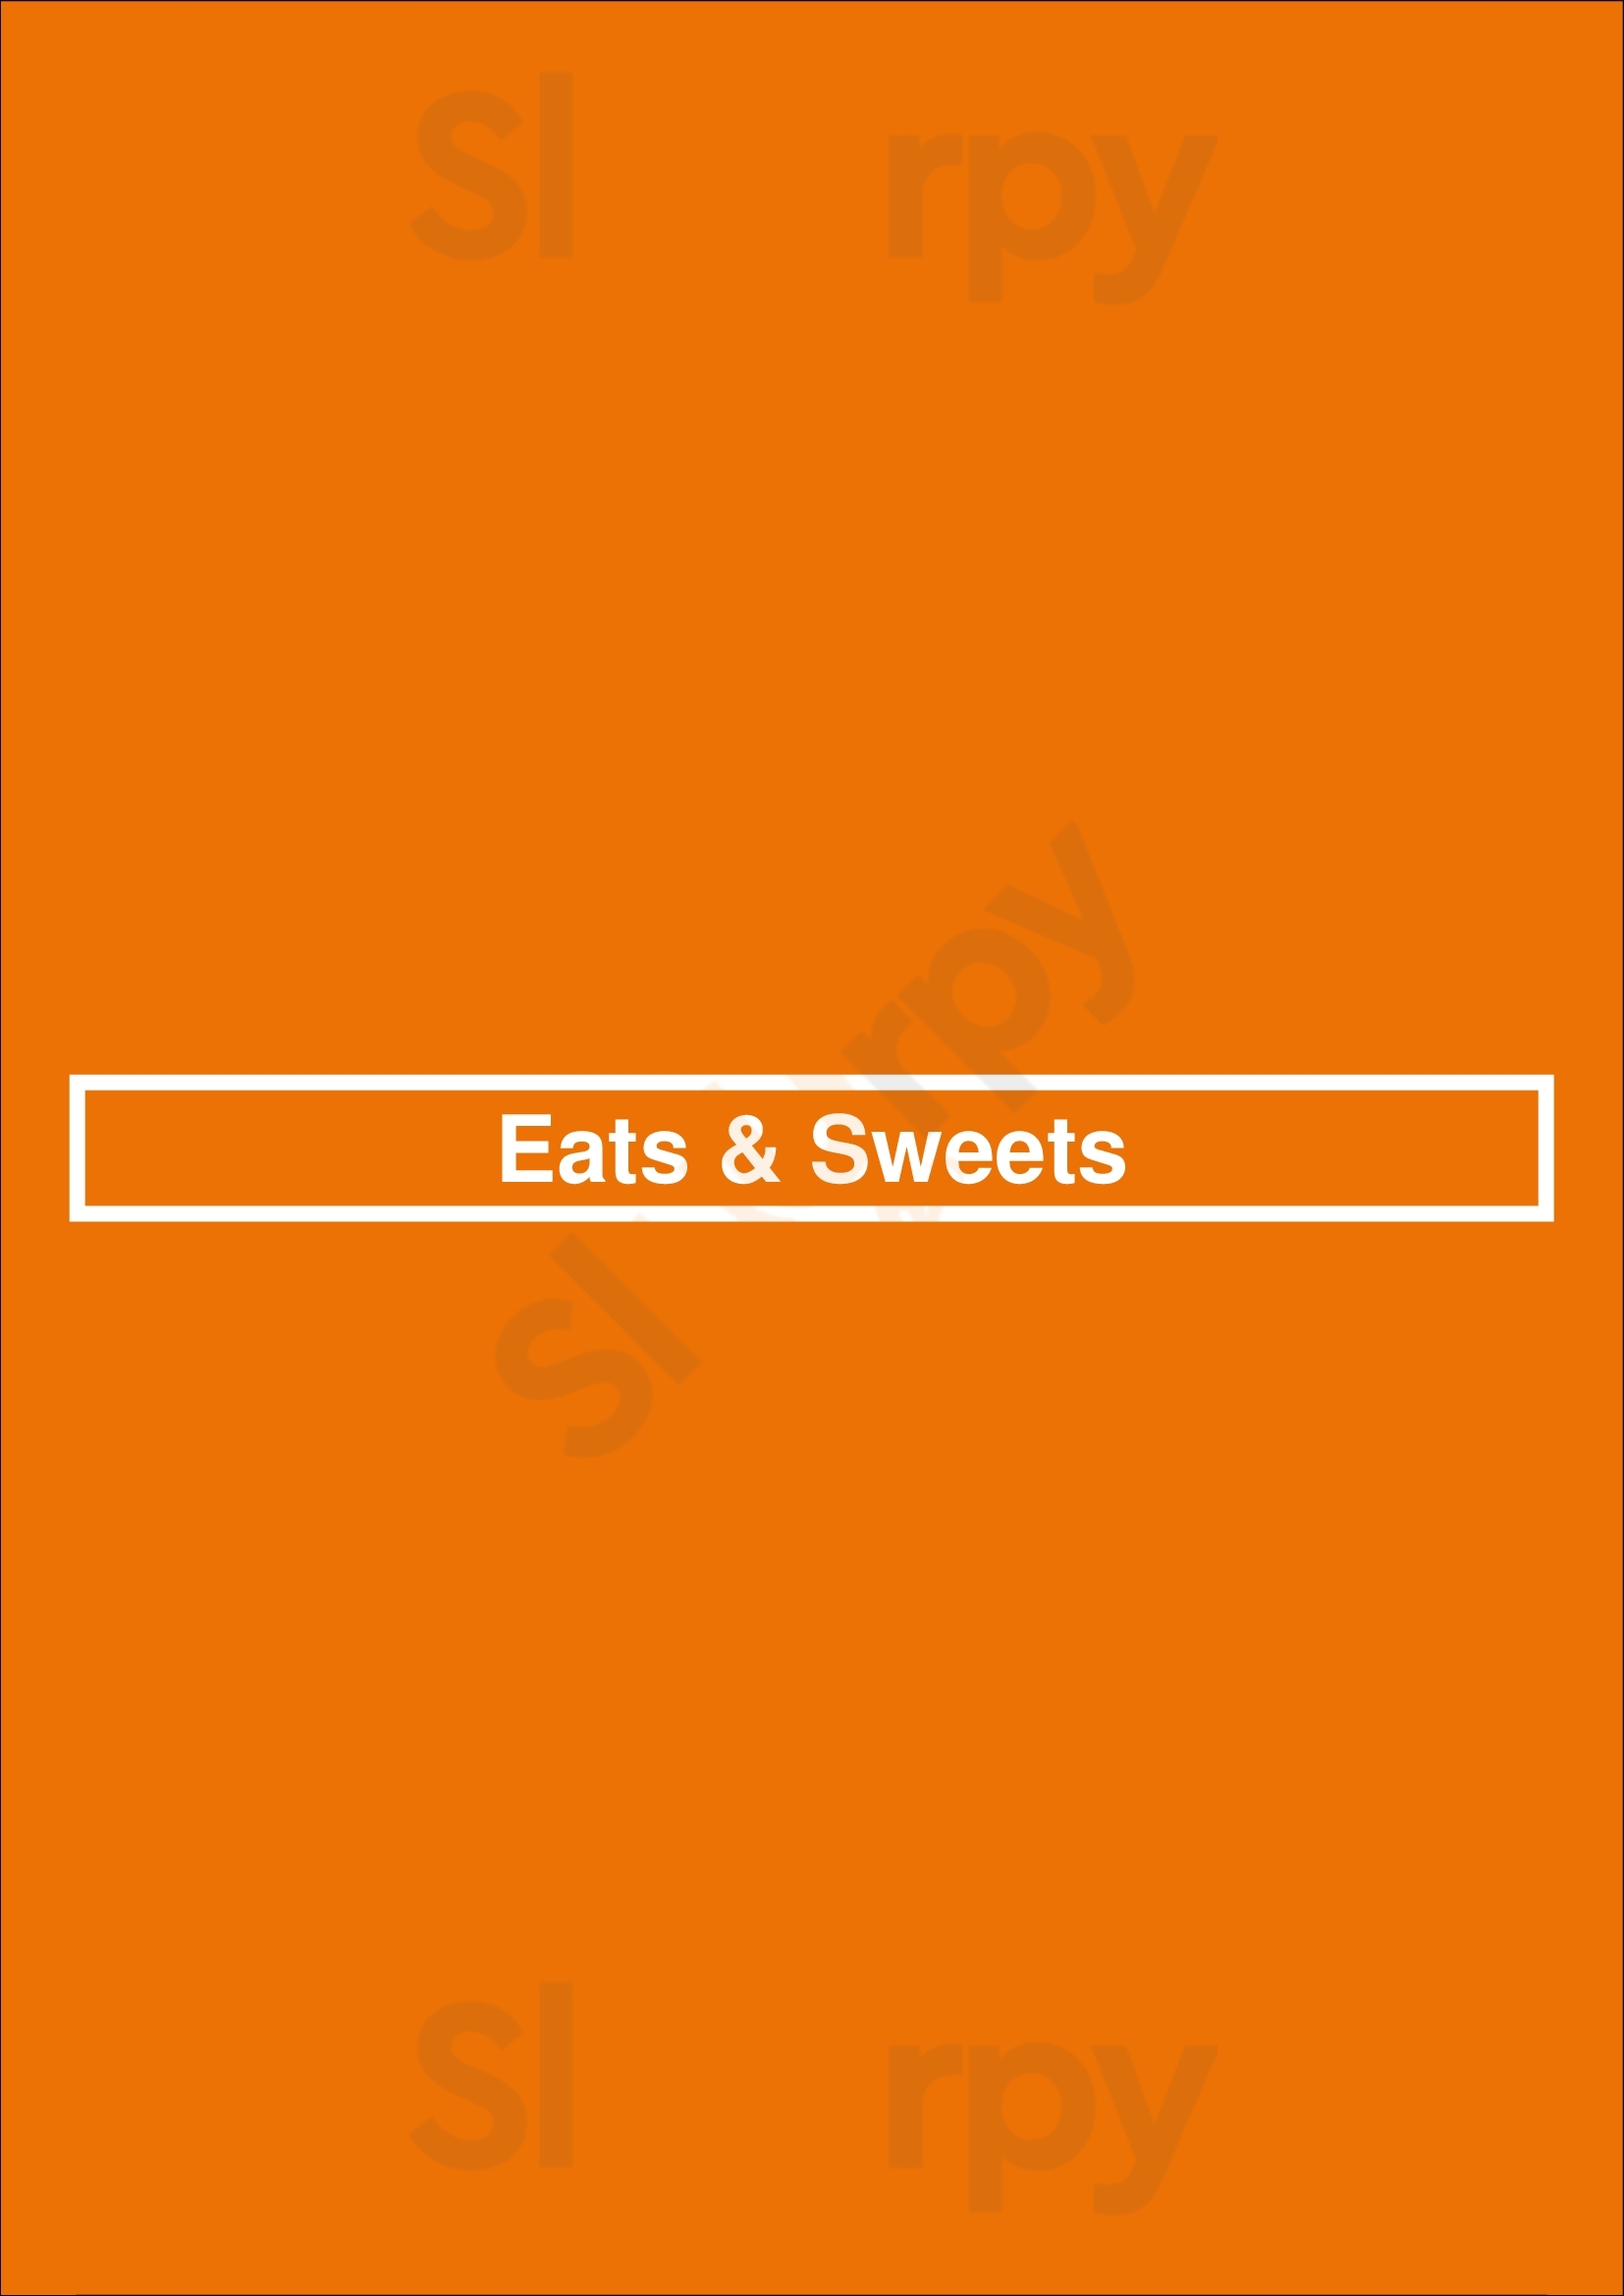 Eats & Sweets Lafayette Menu - 1